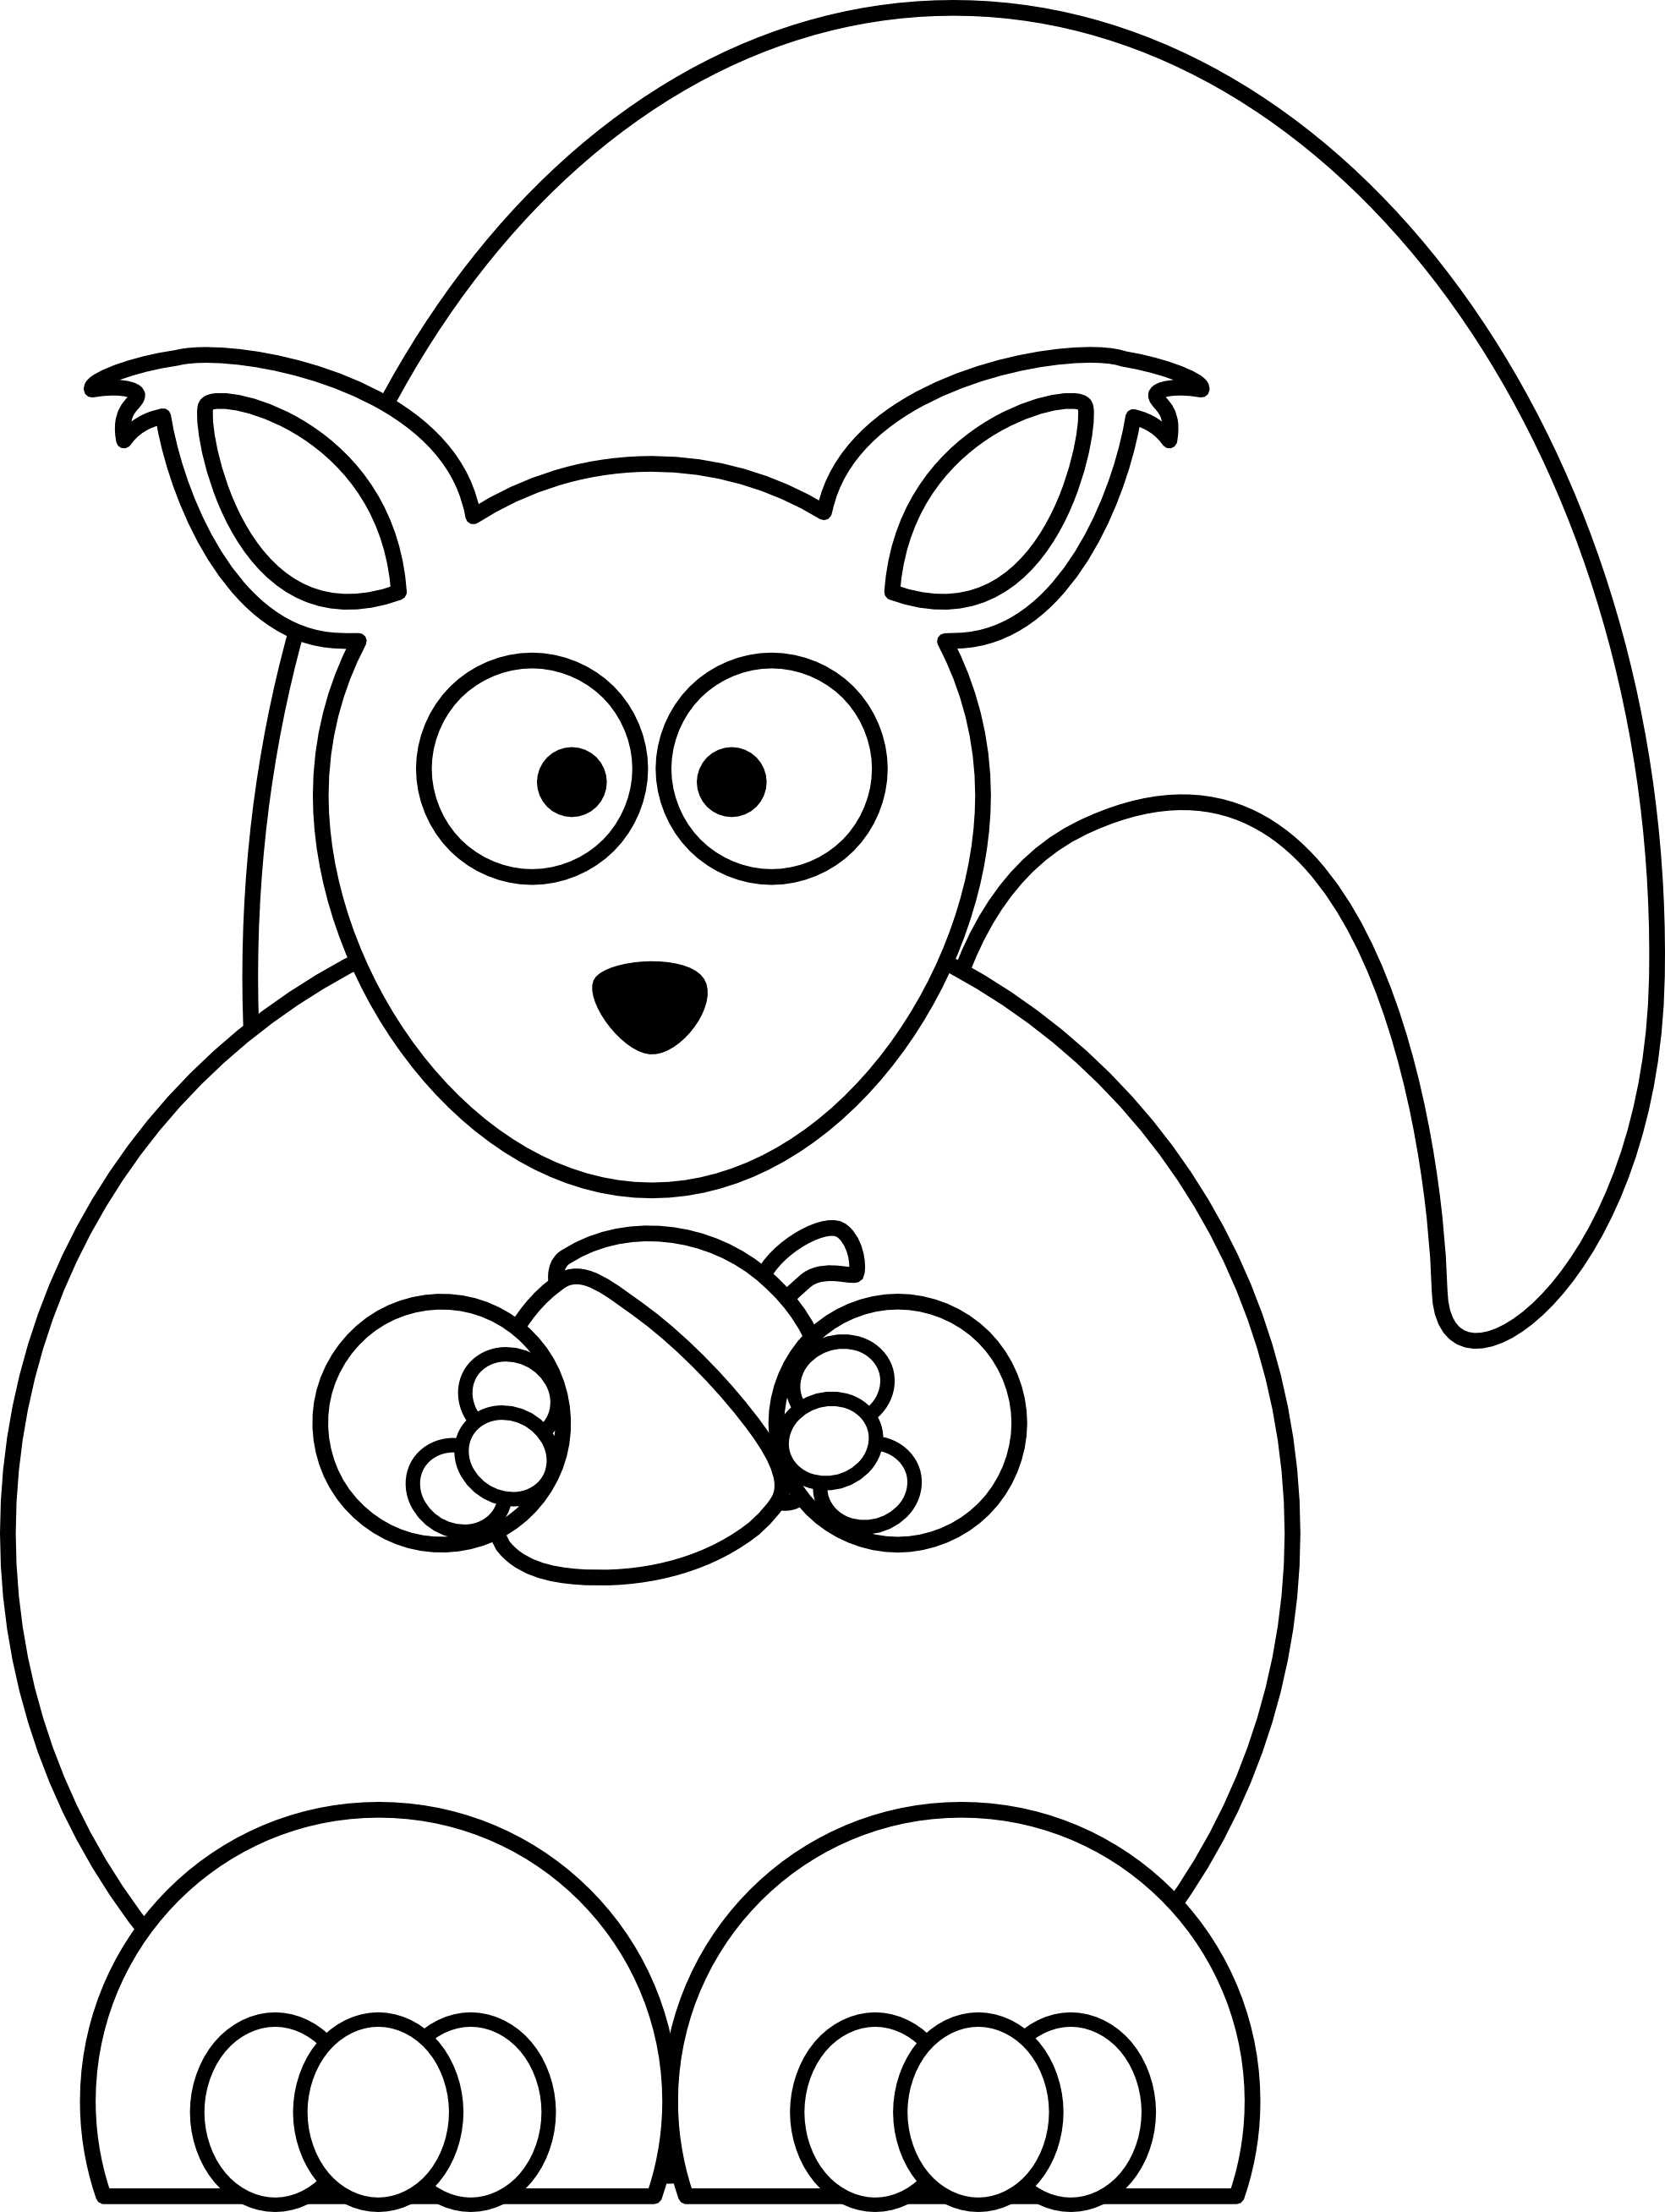 free-cartoon-squirrel-images-download-free-cartoon-squirrel-images-png